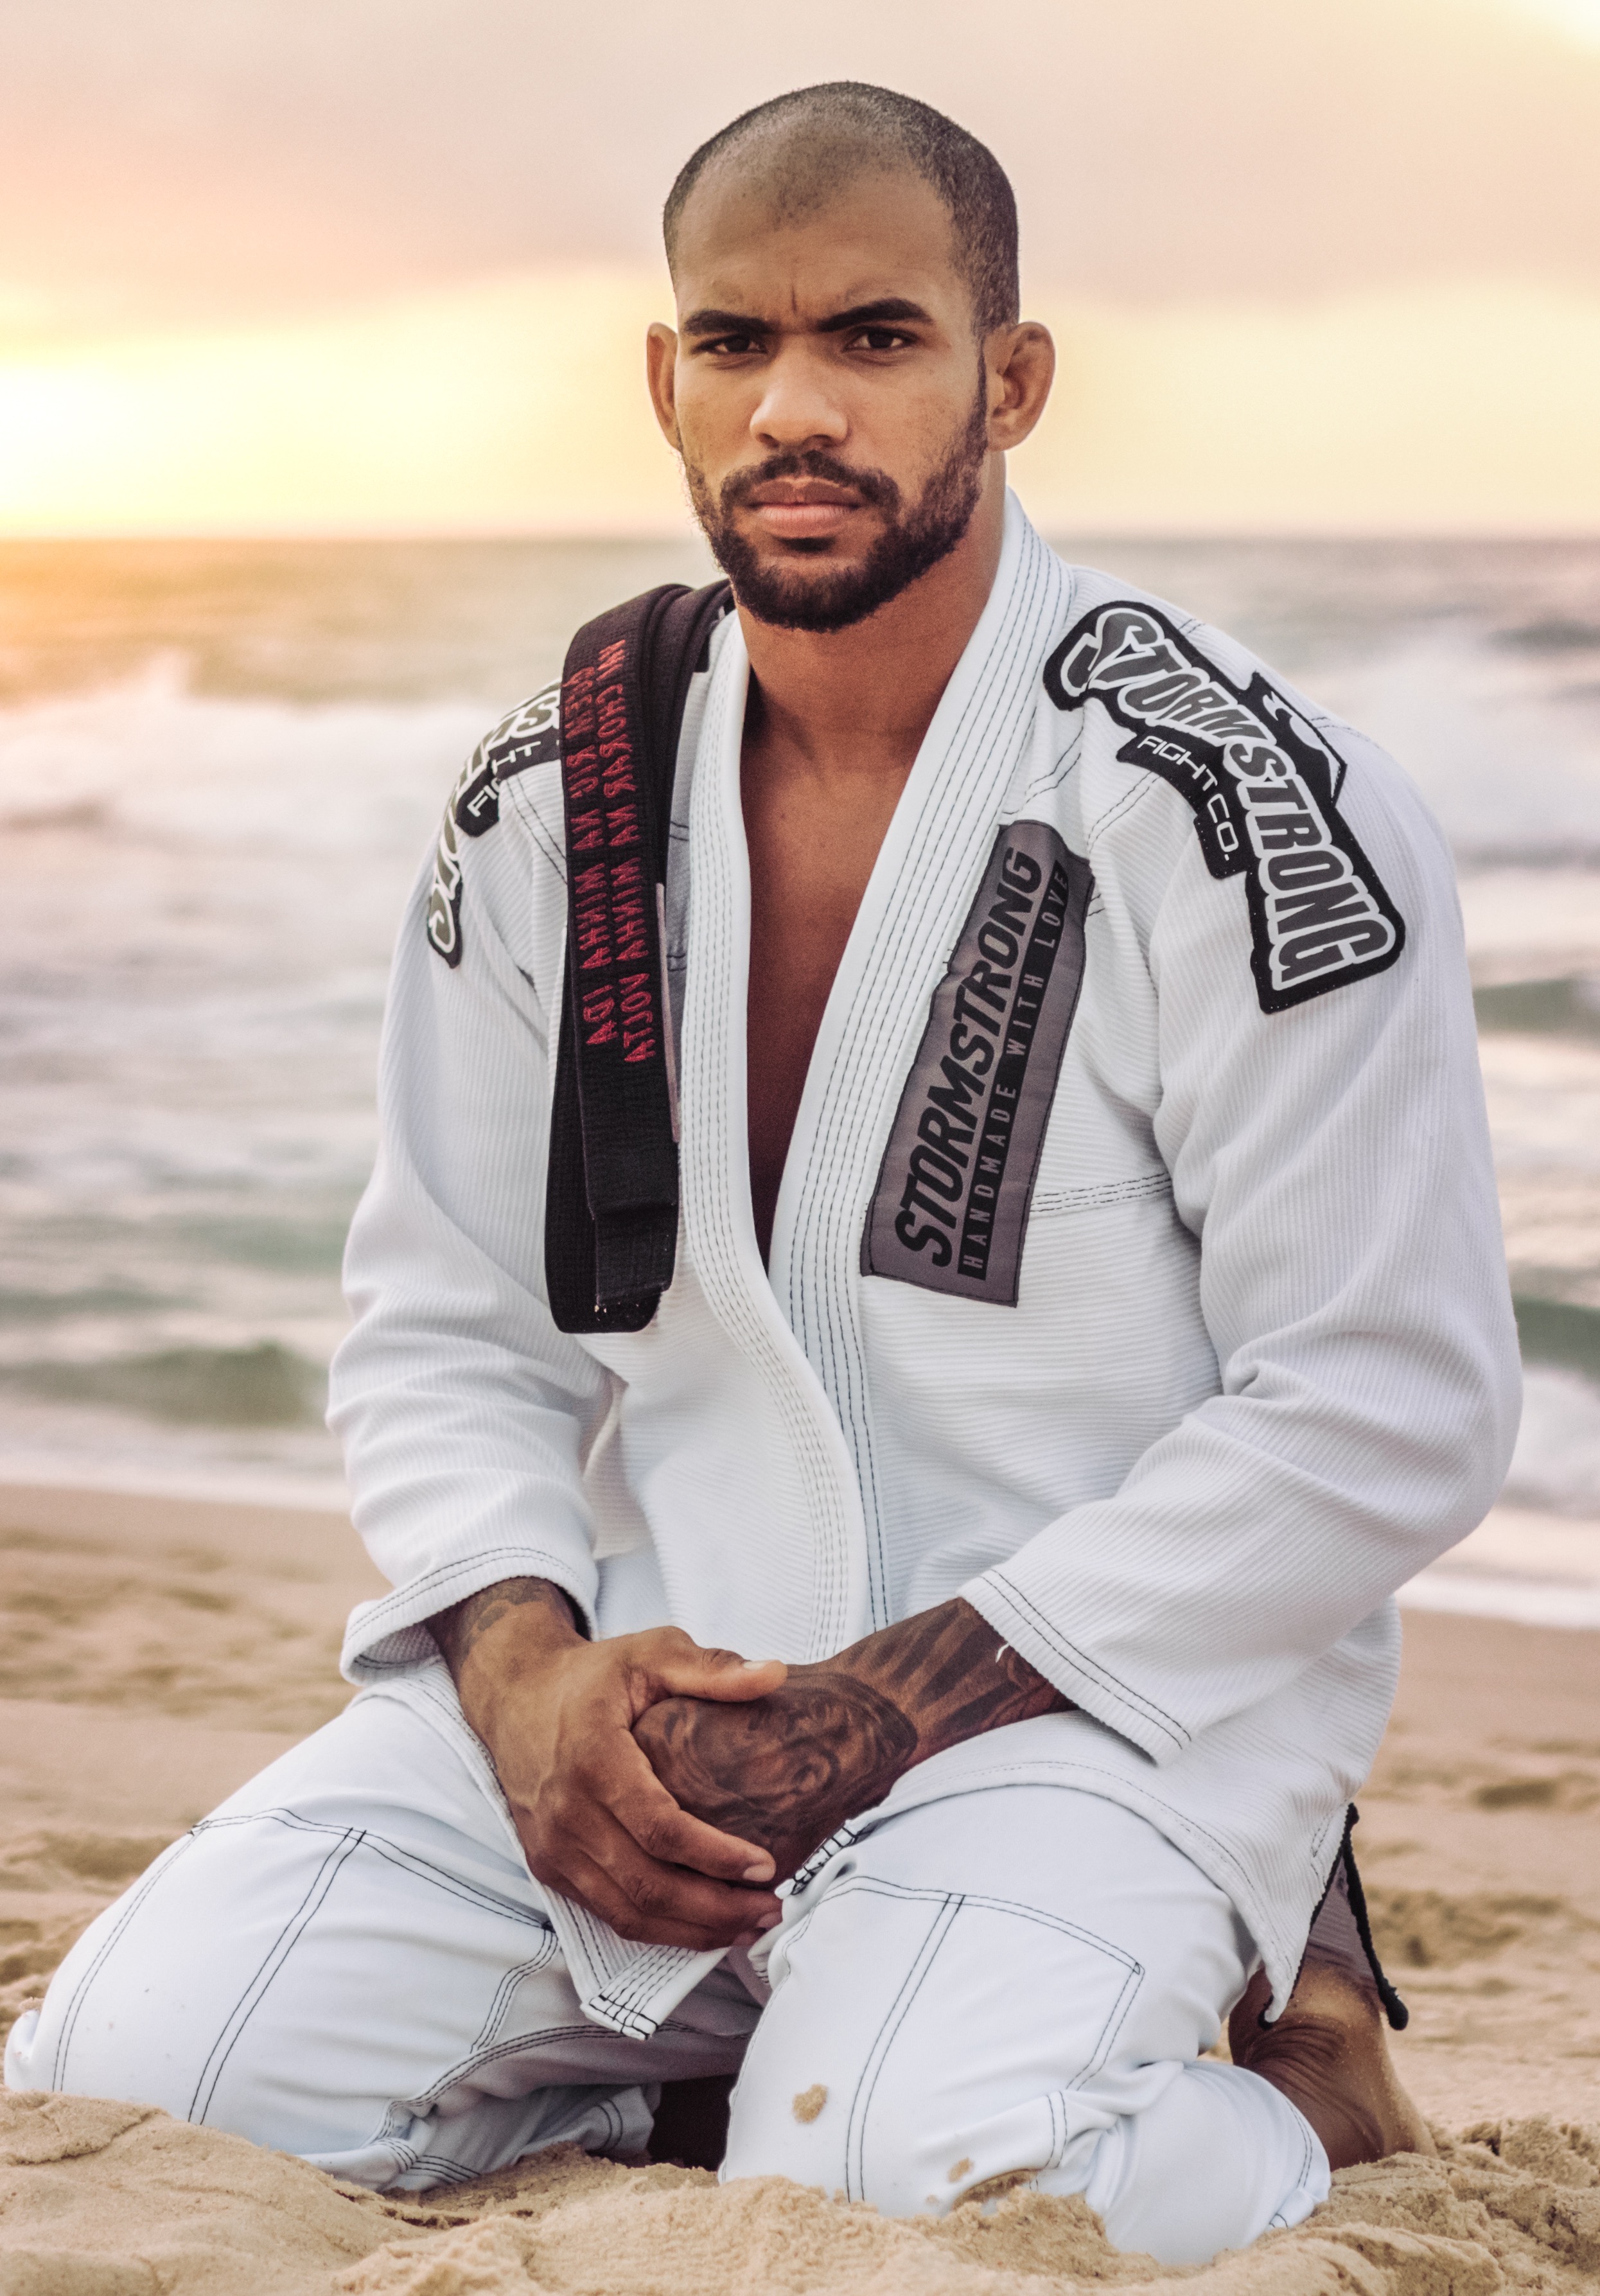 Lutador de Santos vence Brasileiro de Jiu-Jitsu e busca o bi mundial